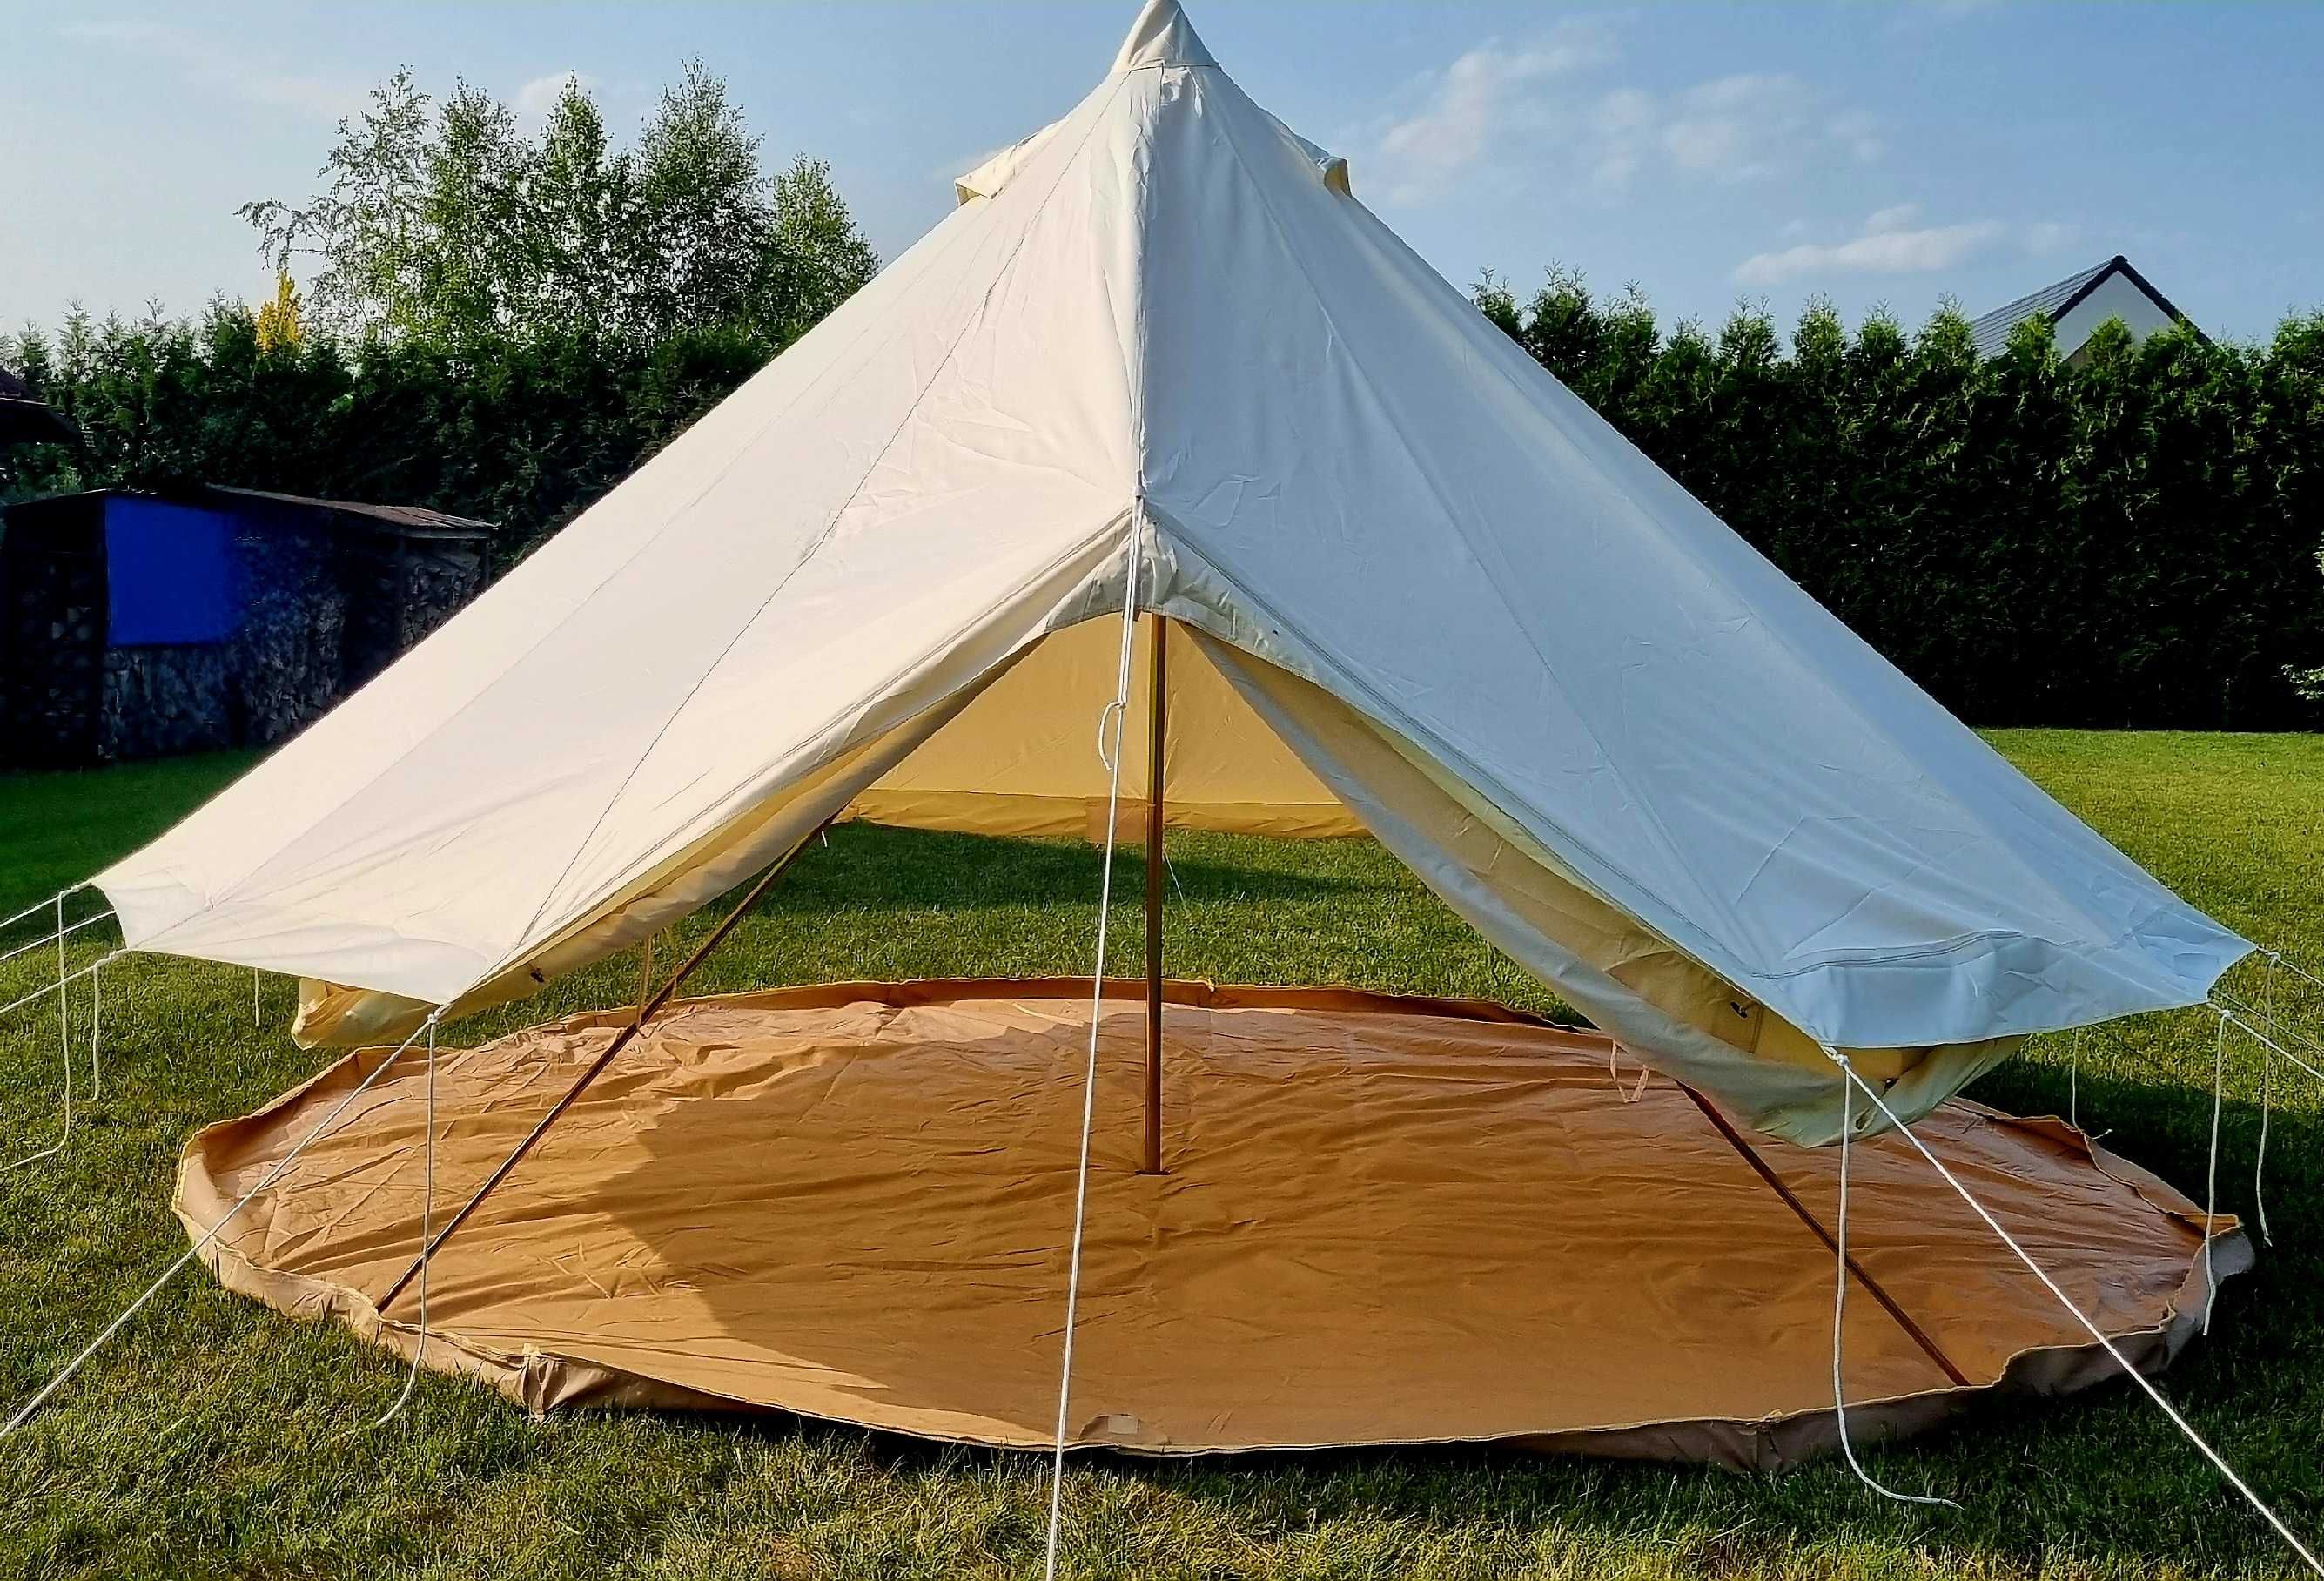 Namiot Glampingowy 5m, Jurta, Bell Tent